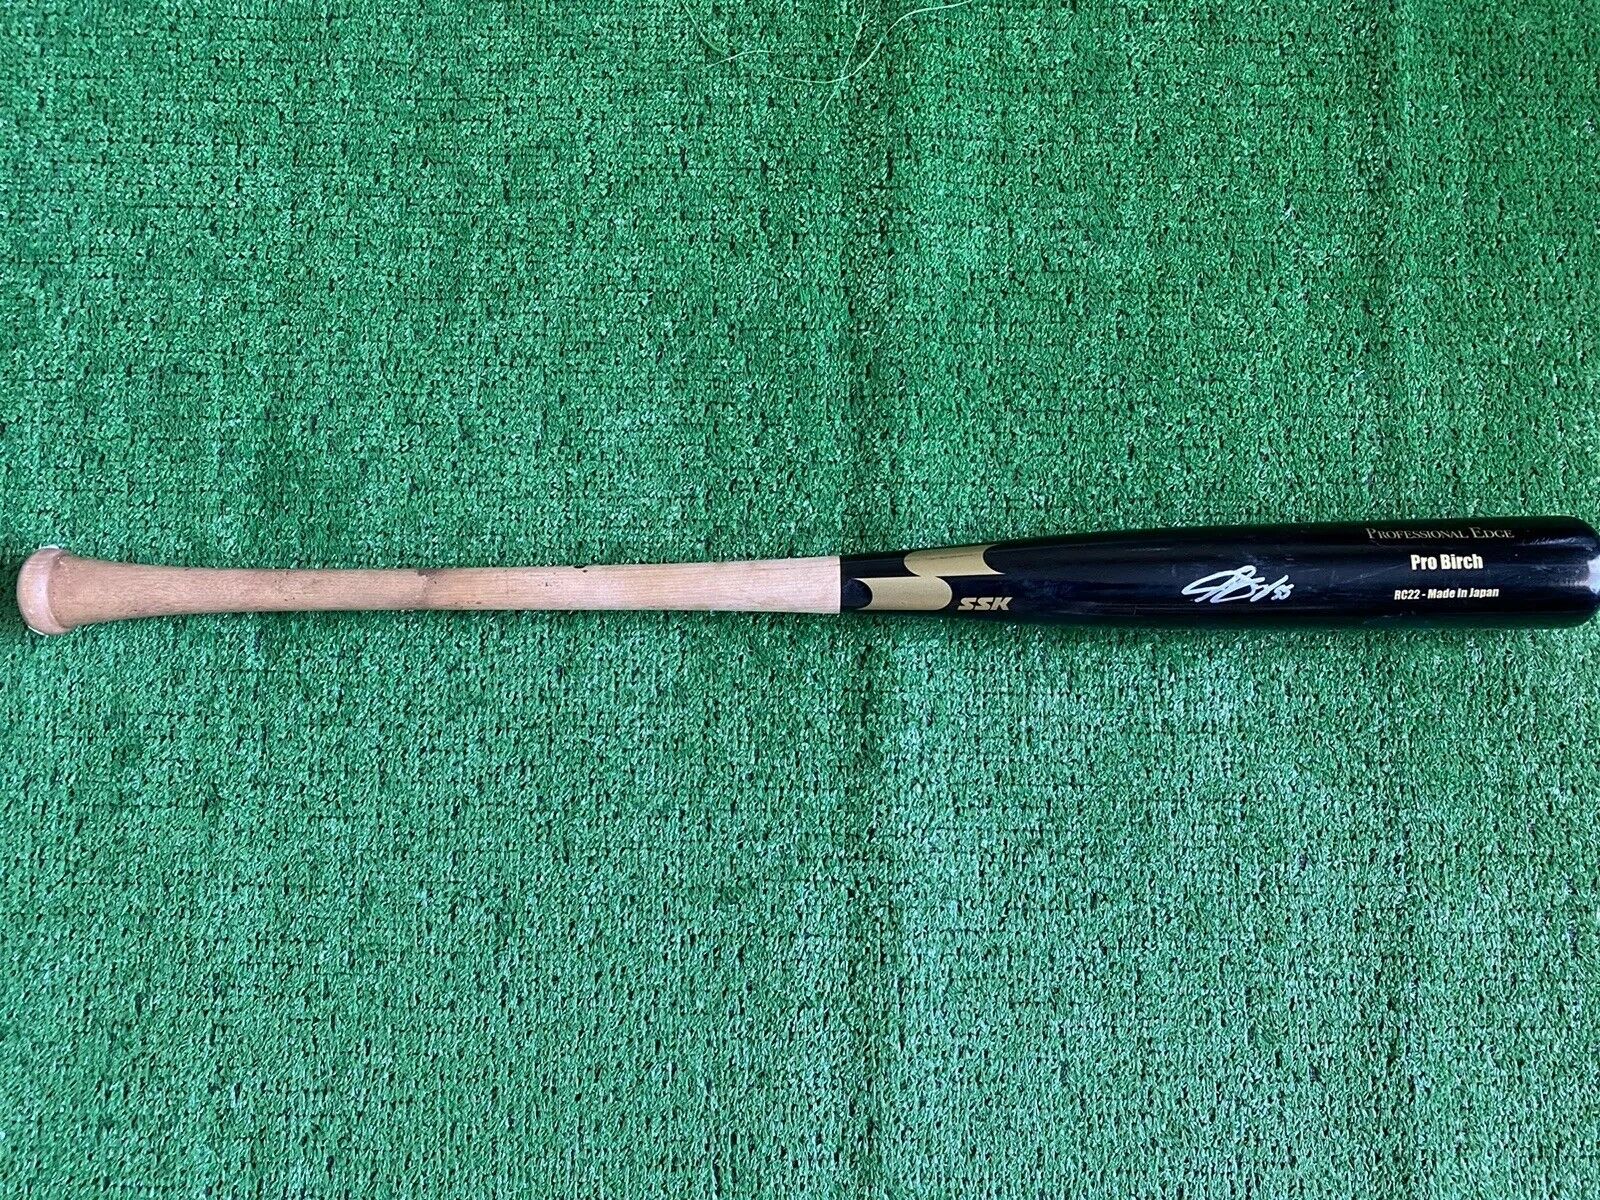 Colorado Rockies Jon Gray Autographed Game Used Baseball Bat